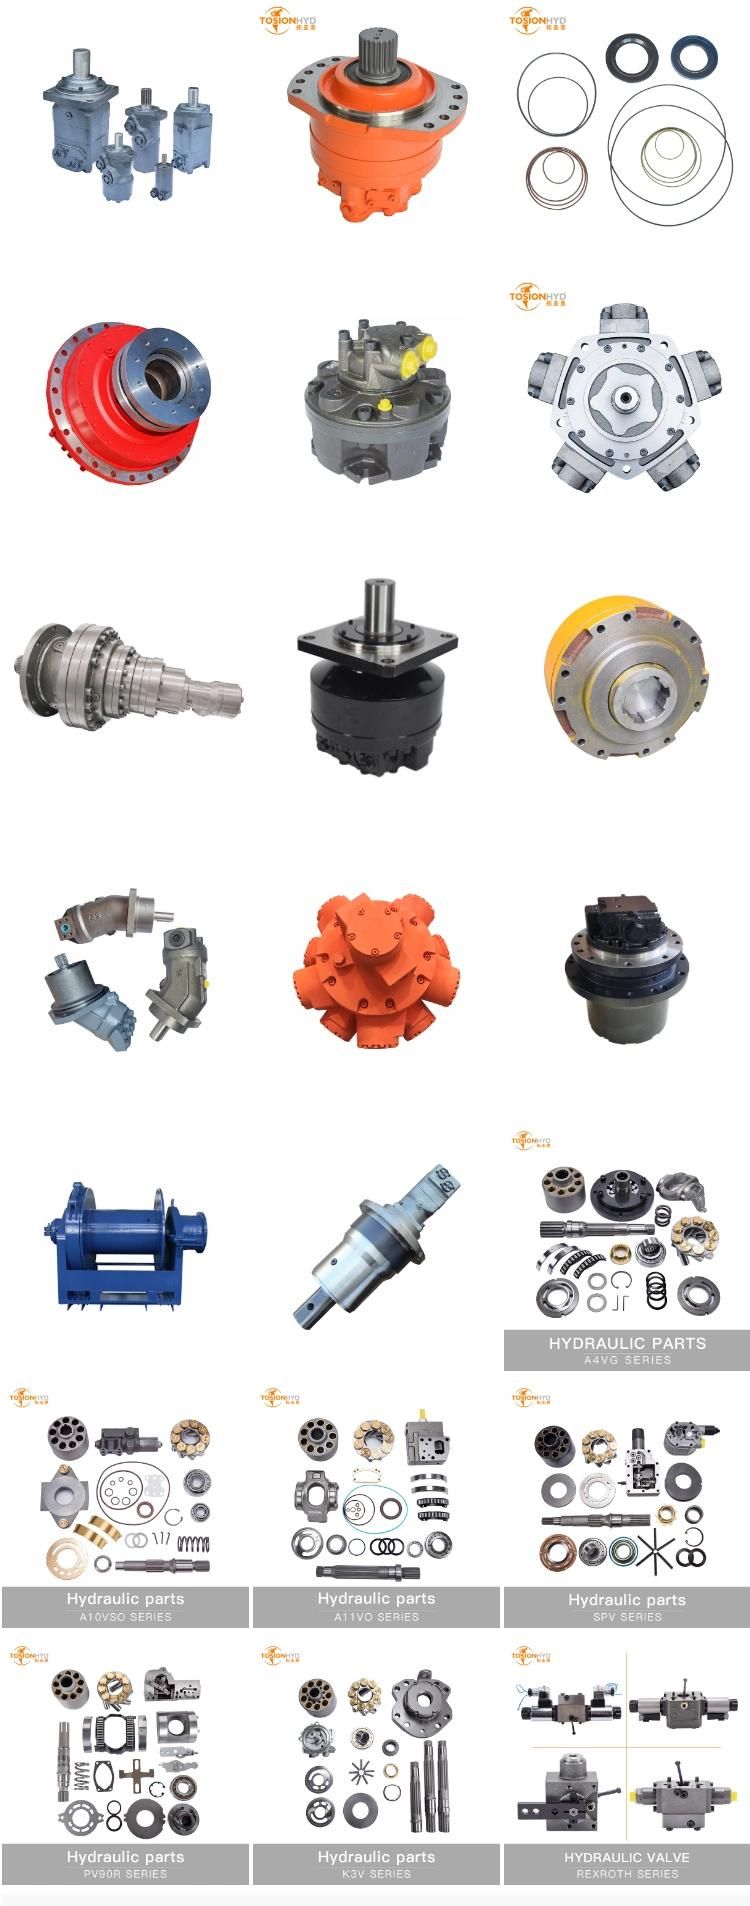 PVD-3b-54 PVD-3b-56 PVD-3b-60 PVD-3b-66p Hydraulic Pump Parts with NACHI Spare Repair Kit